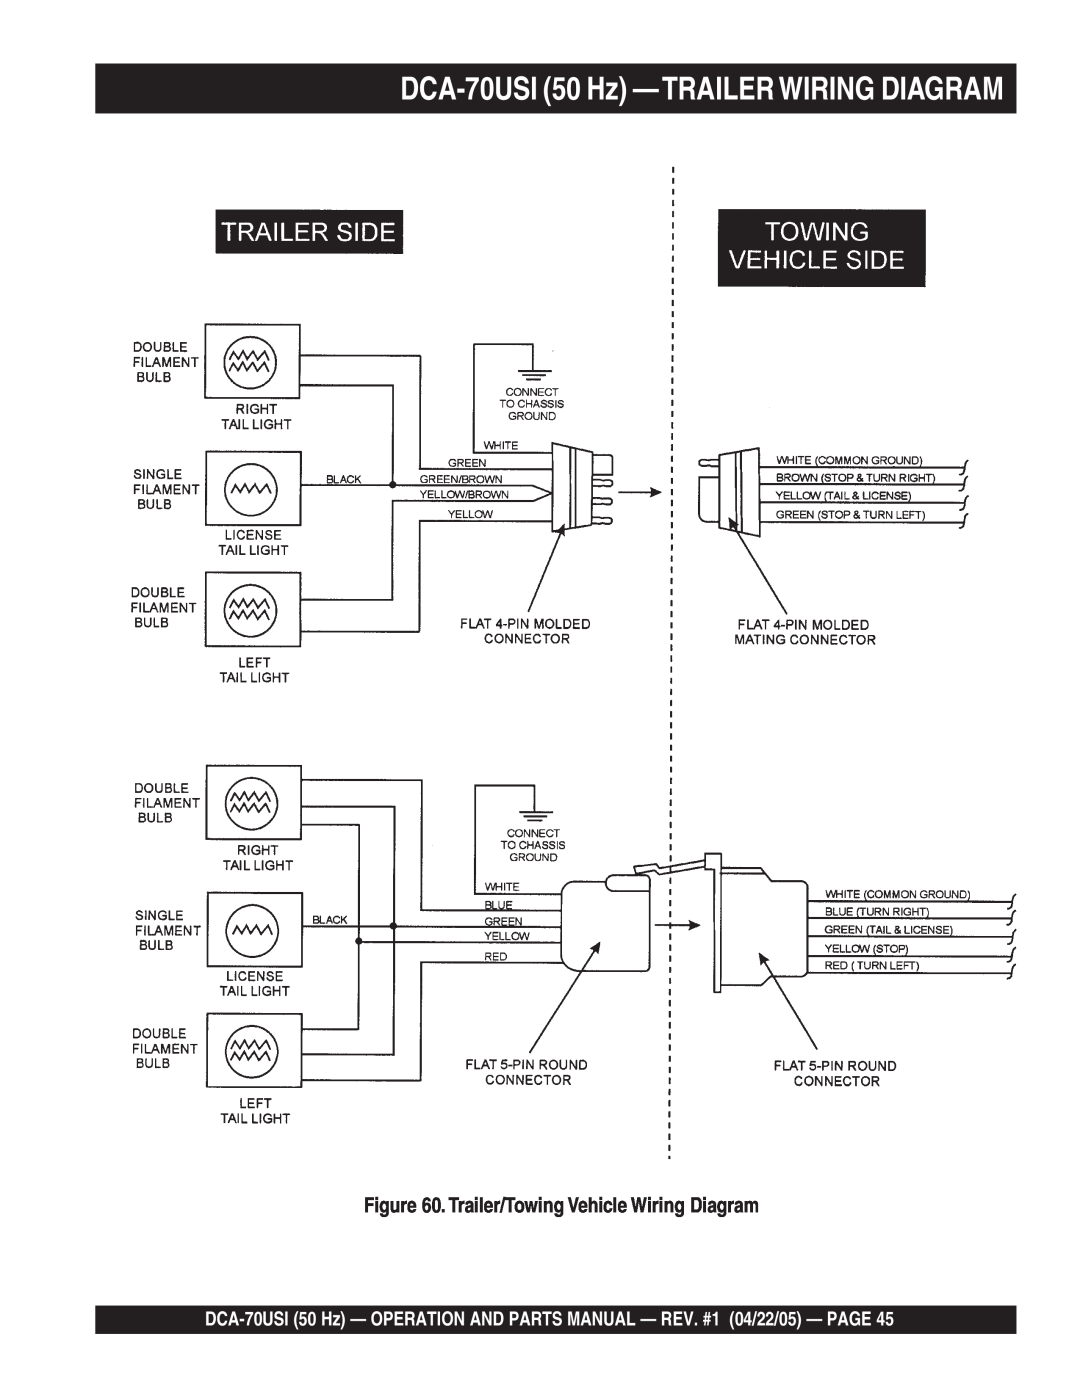 Multiquip operation manual DCA-70USI50 Hz —TRAILERWIRING DIAGRAM, Trailer/Towing Vehicle Wiring Diagram 